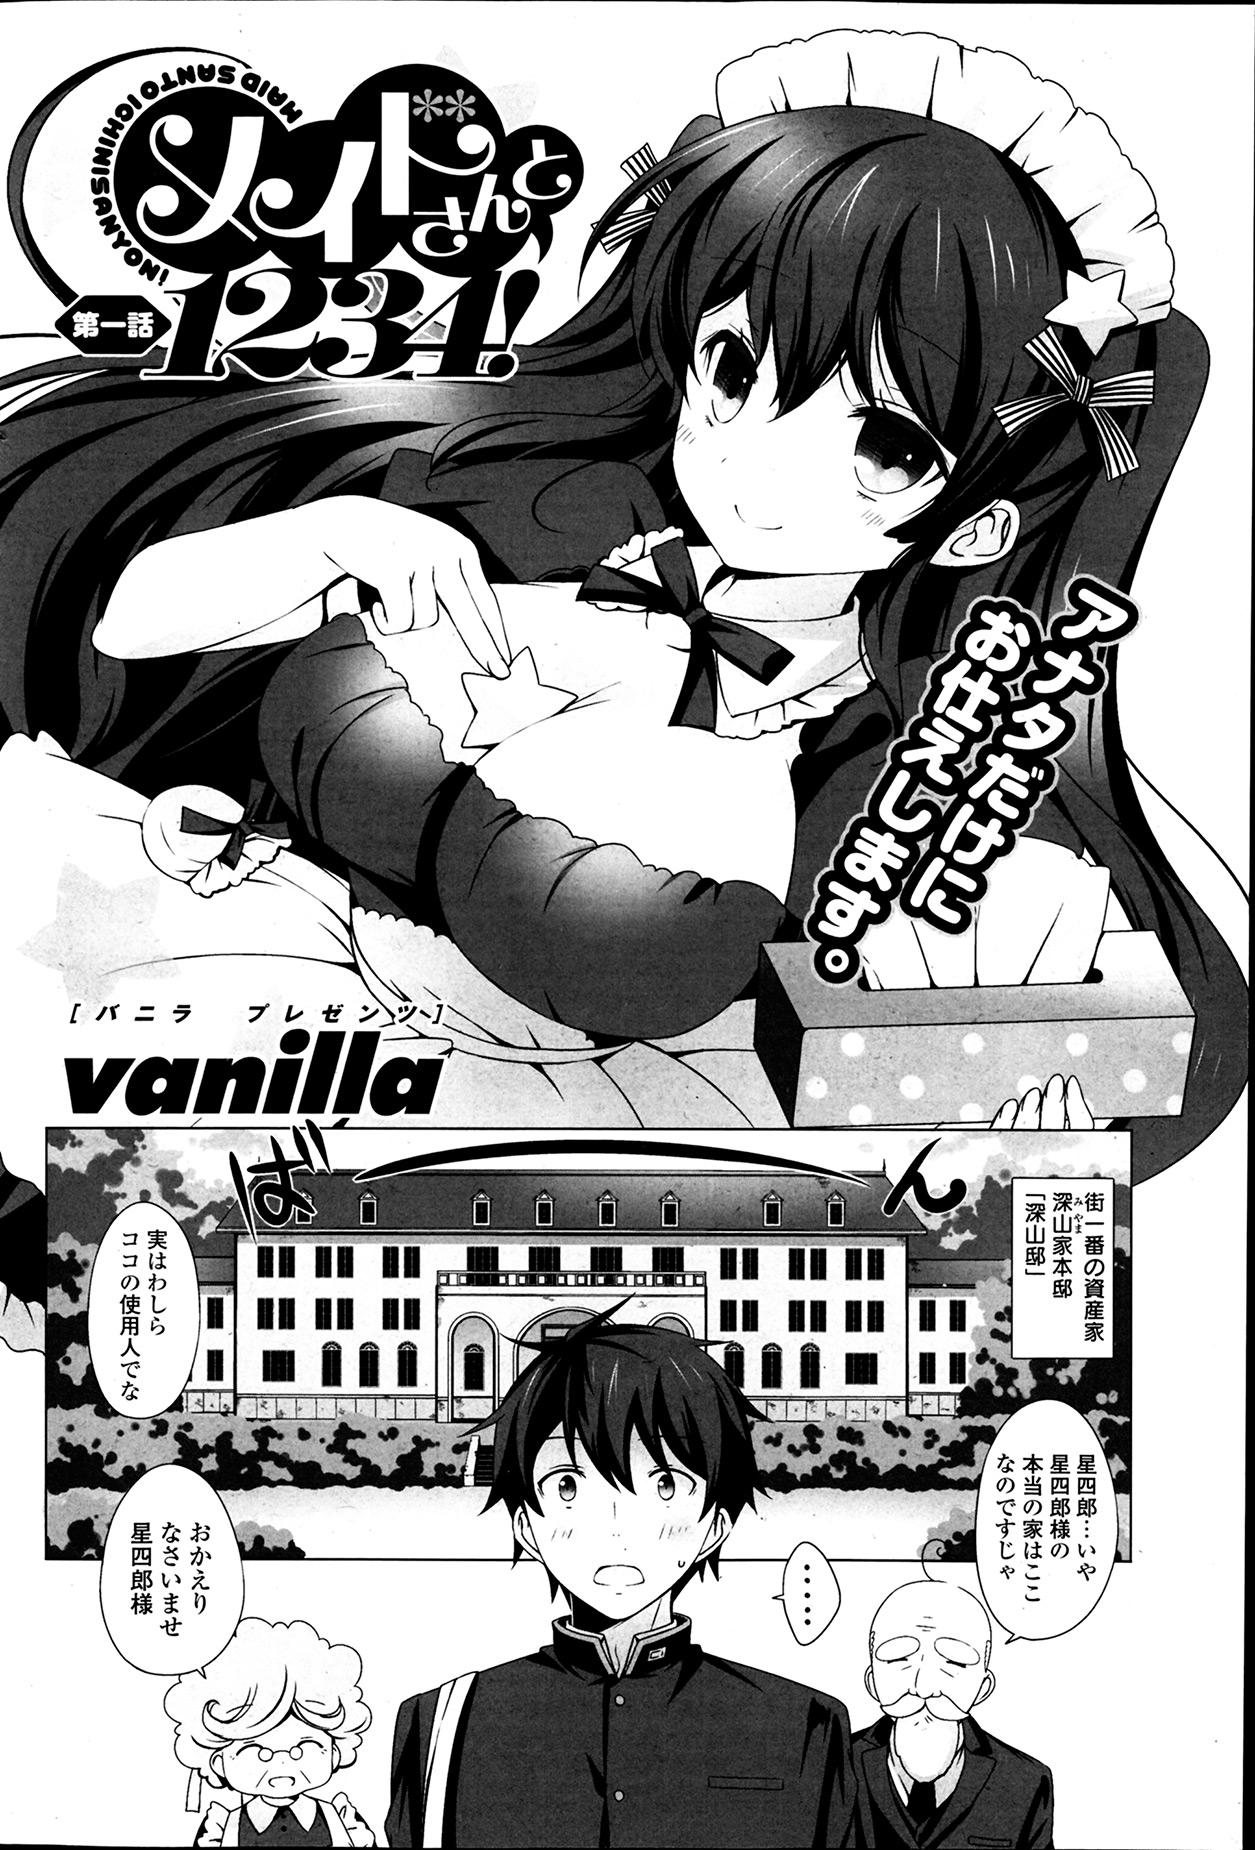 [Vanilla] Maid-san to 1234! Ch.1-4 1